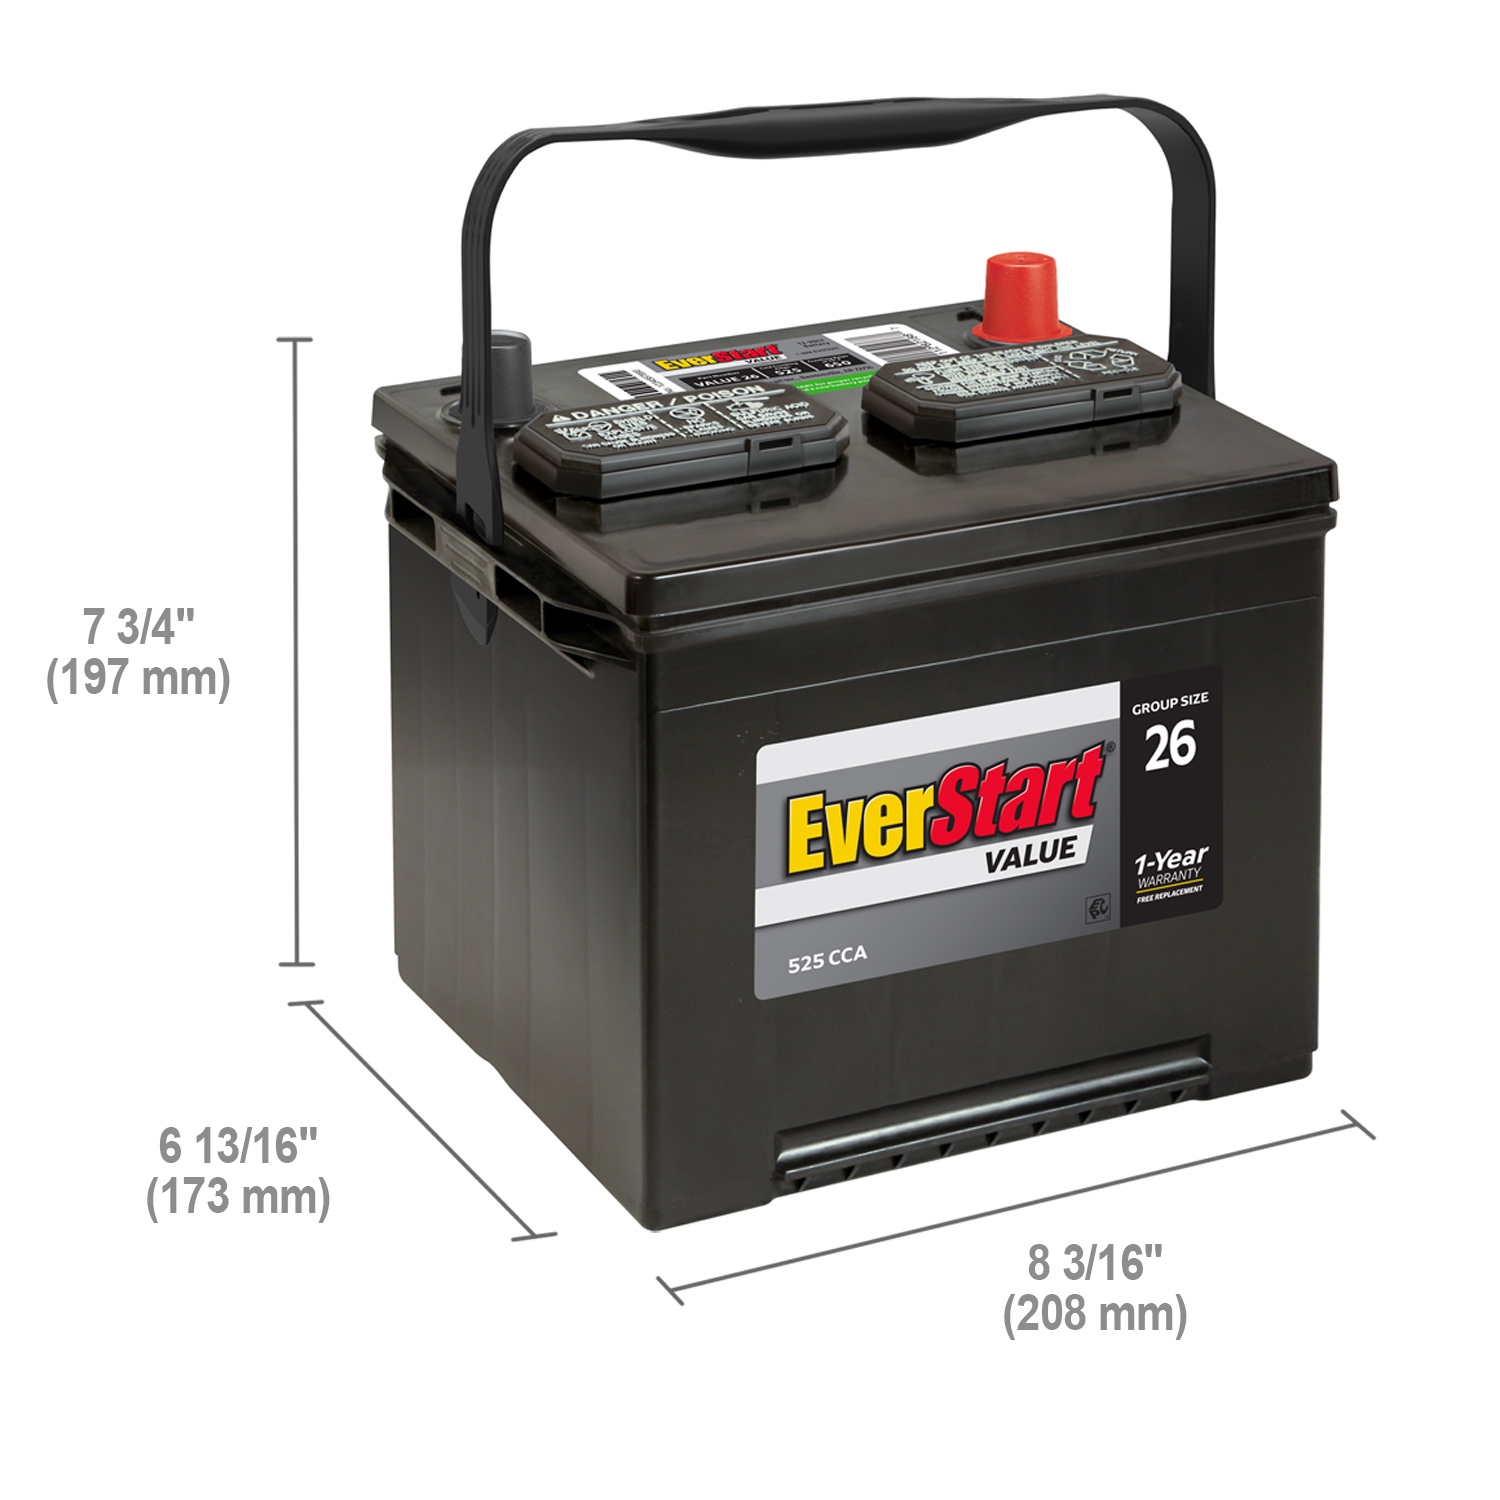 EverStart Value Lead Acid Automotive Battery, Group Size 26 12 Volt, 525 CCA - image 2 of 7